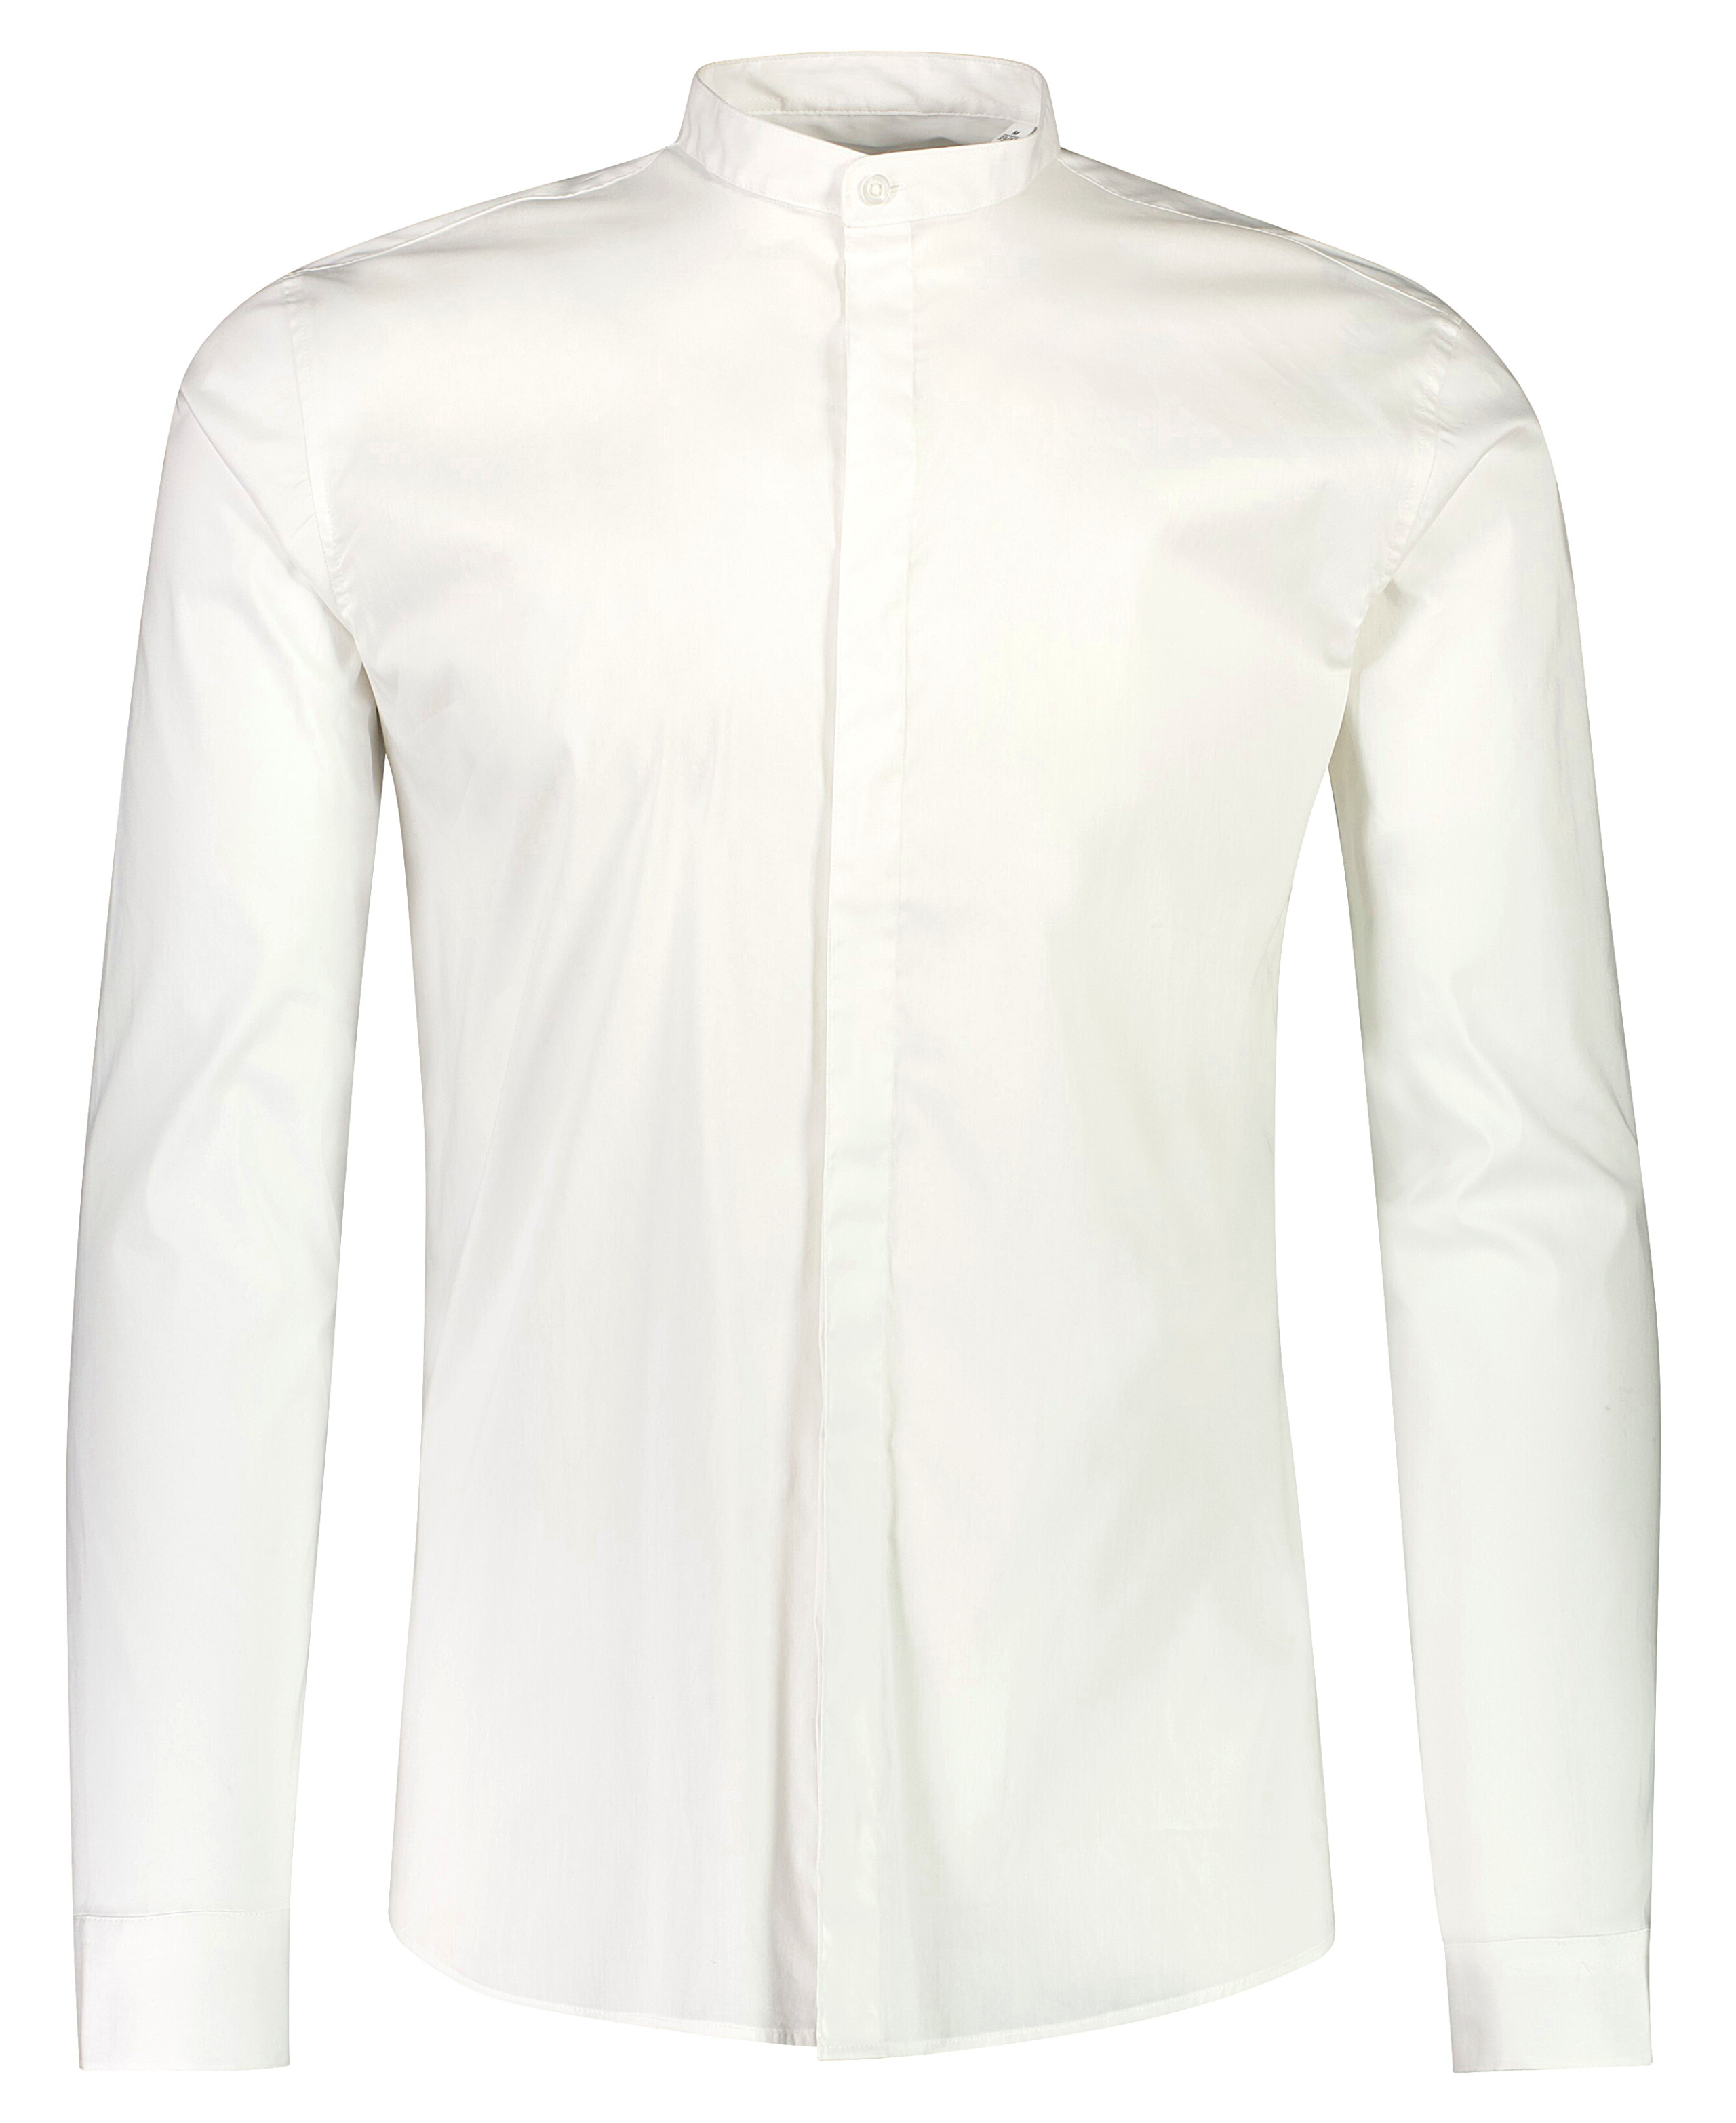 Lindbergh Business casual skjorte hvid / white